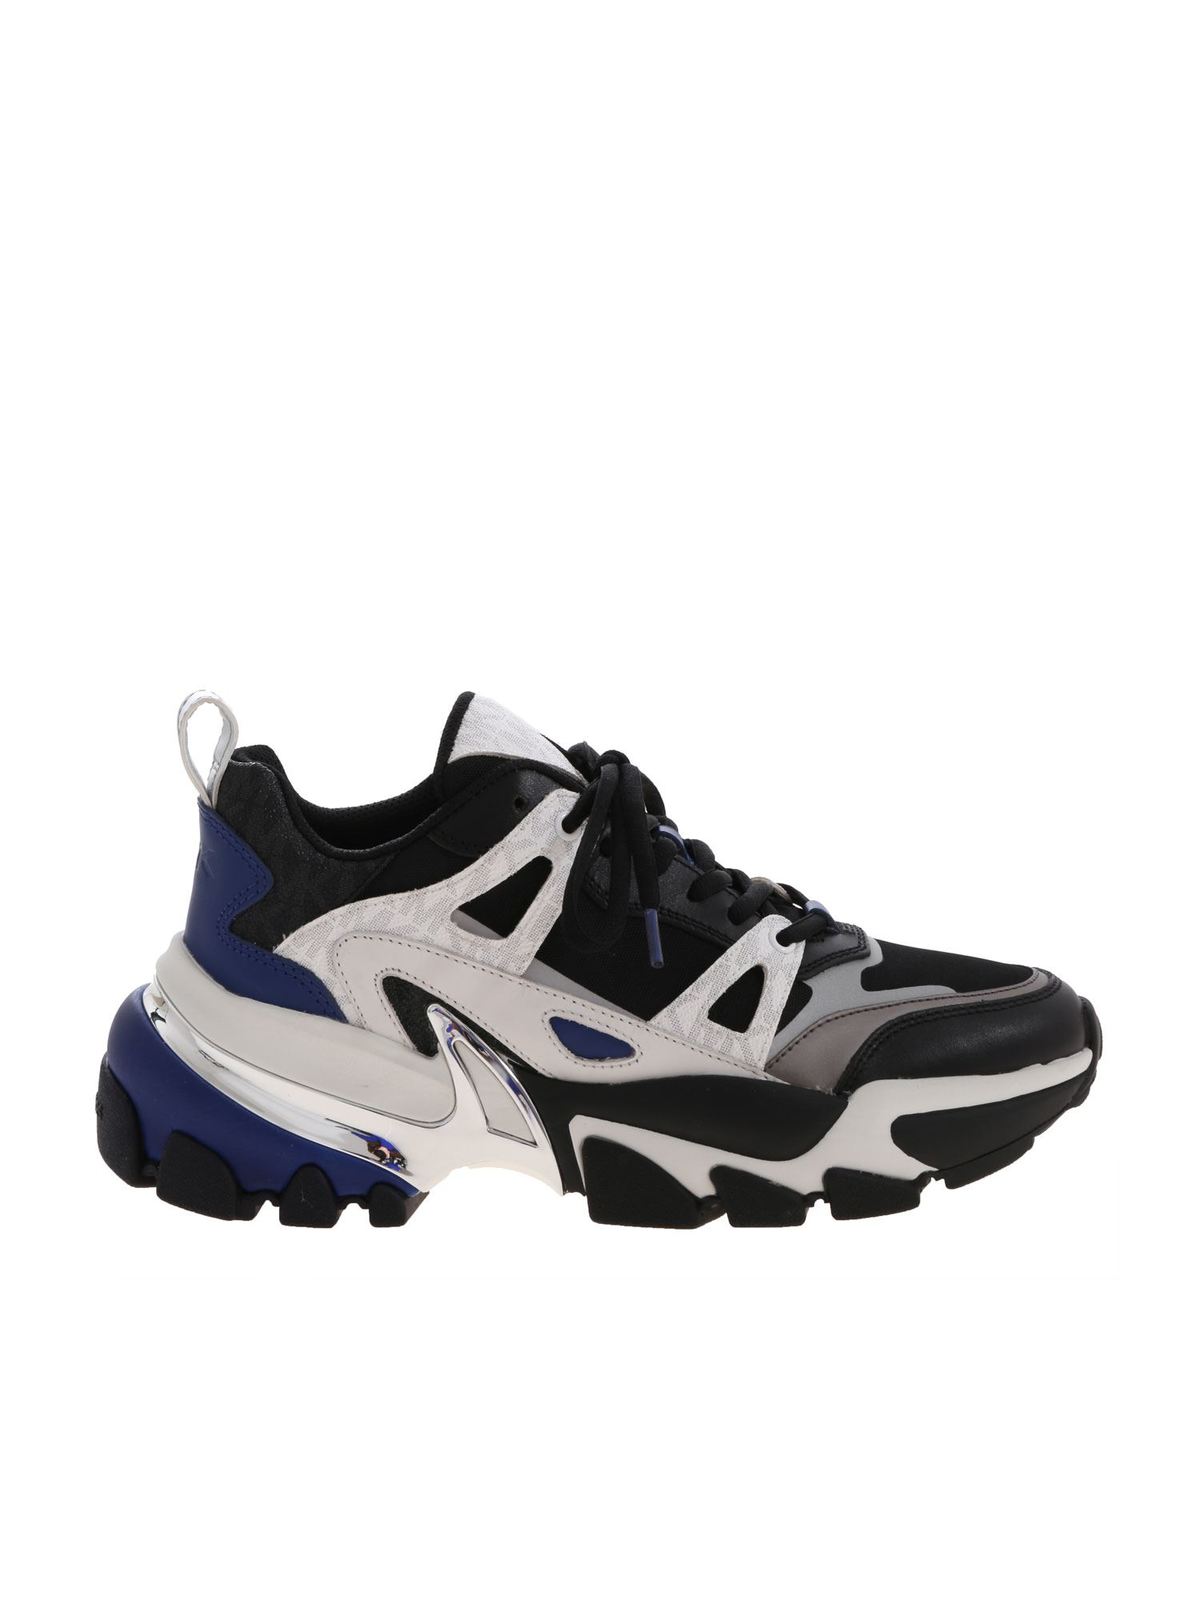 Trainers Michael Kors - Sneakers Penn black blue and white -  42ROPEFS2DTWILIGHTBLUE